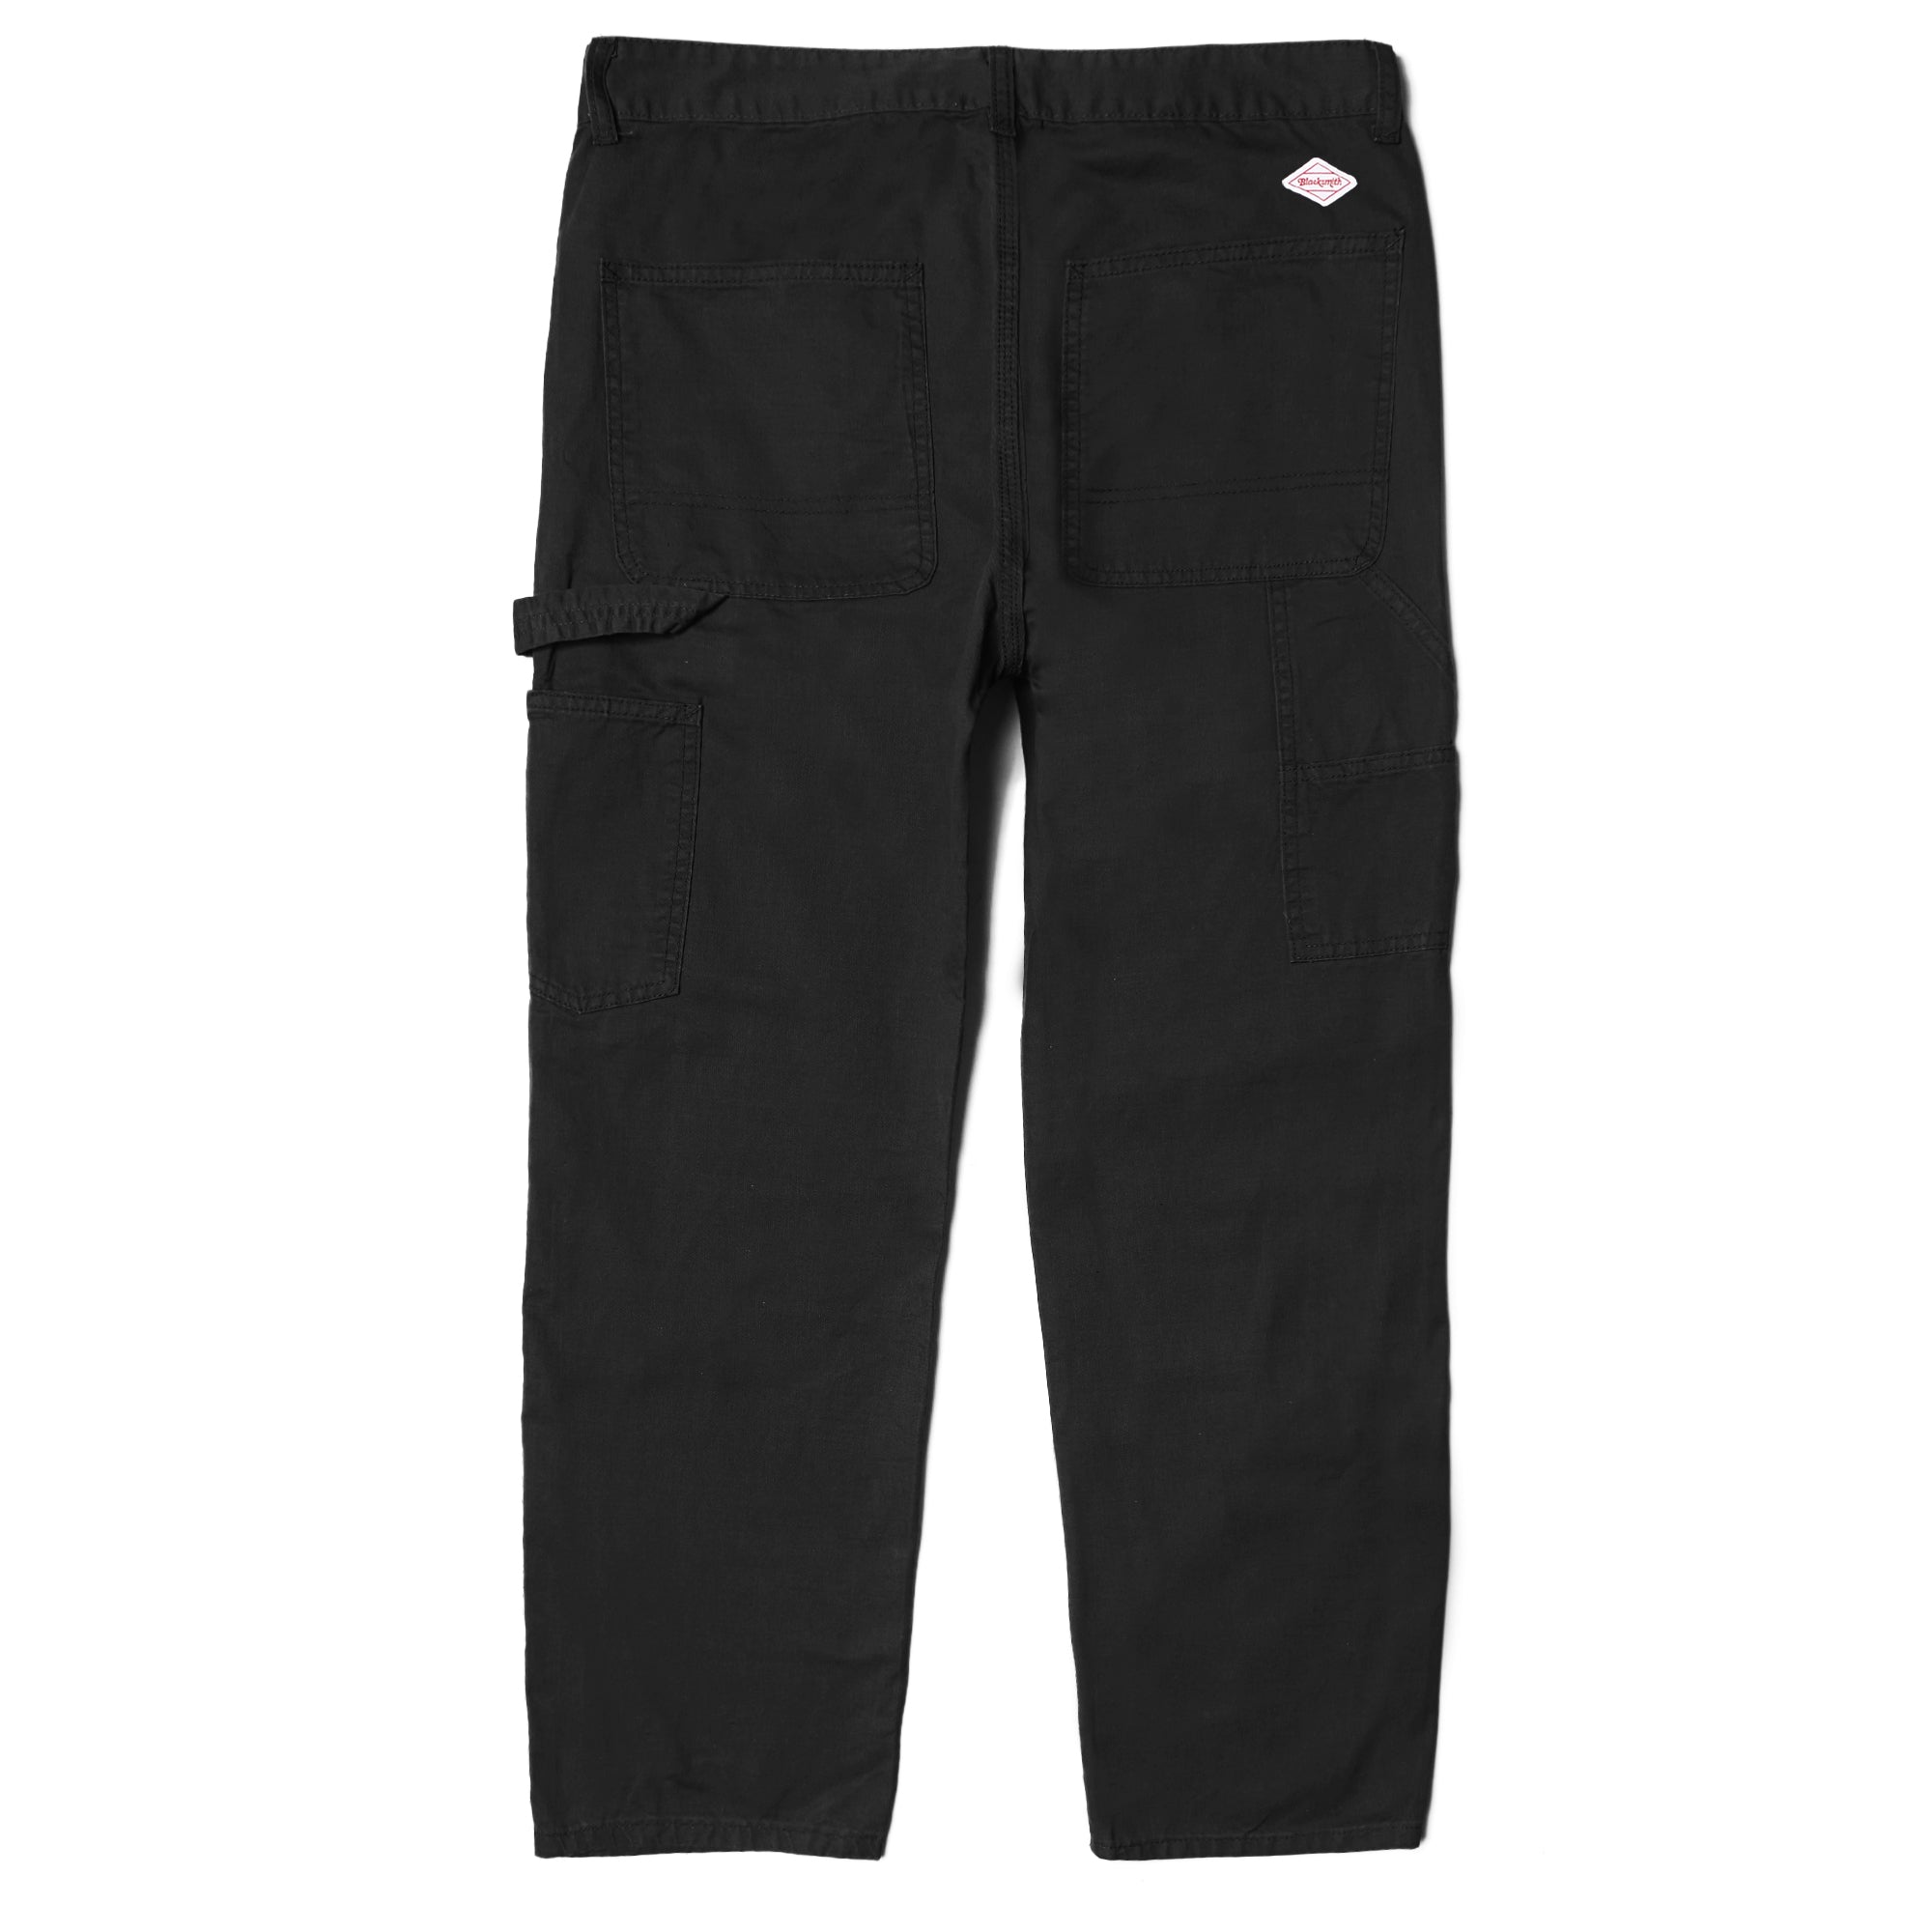 Blacksmith - Double Knee Carpenter Pants - Black | Blacksmith Store